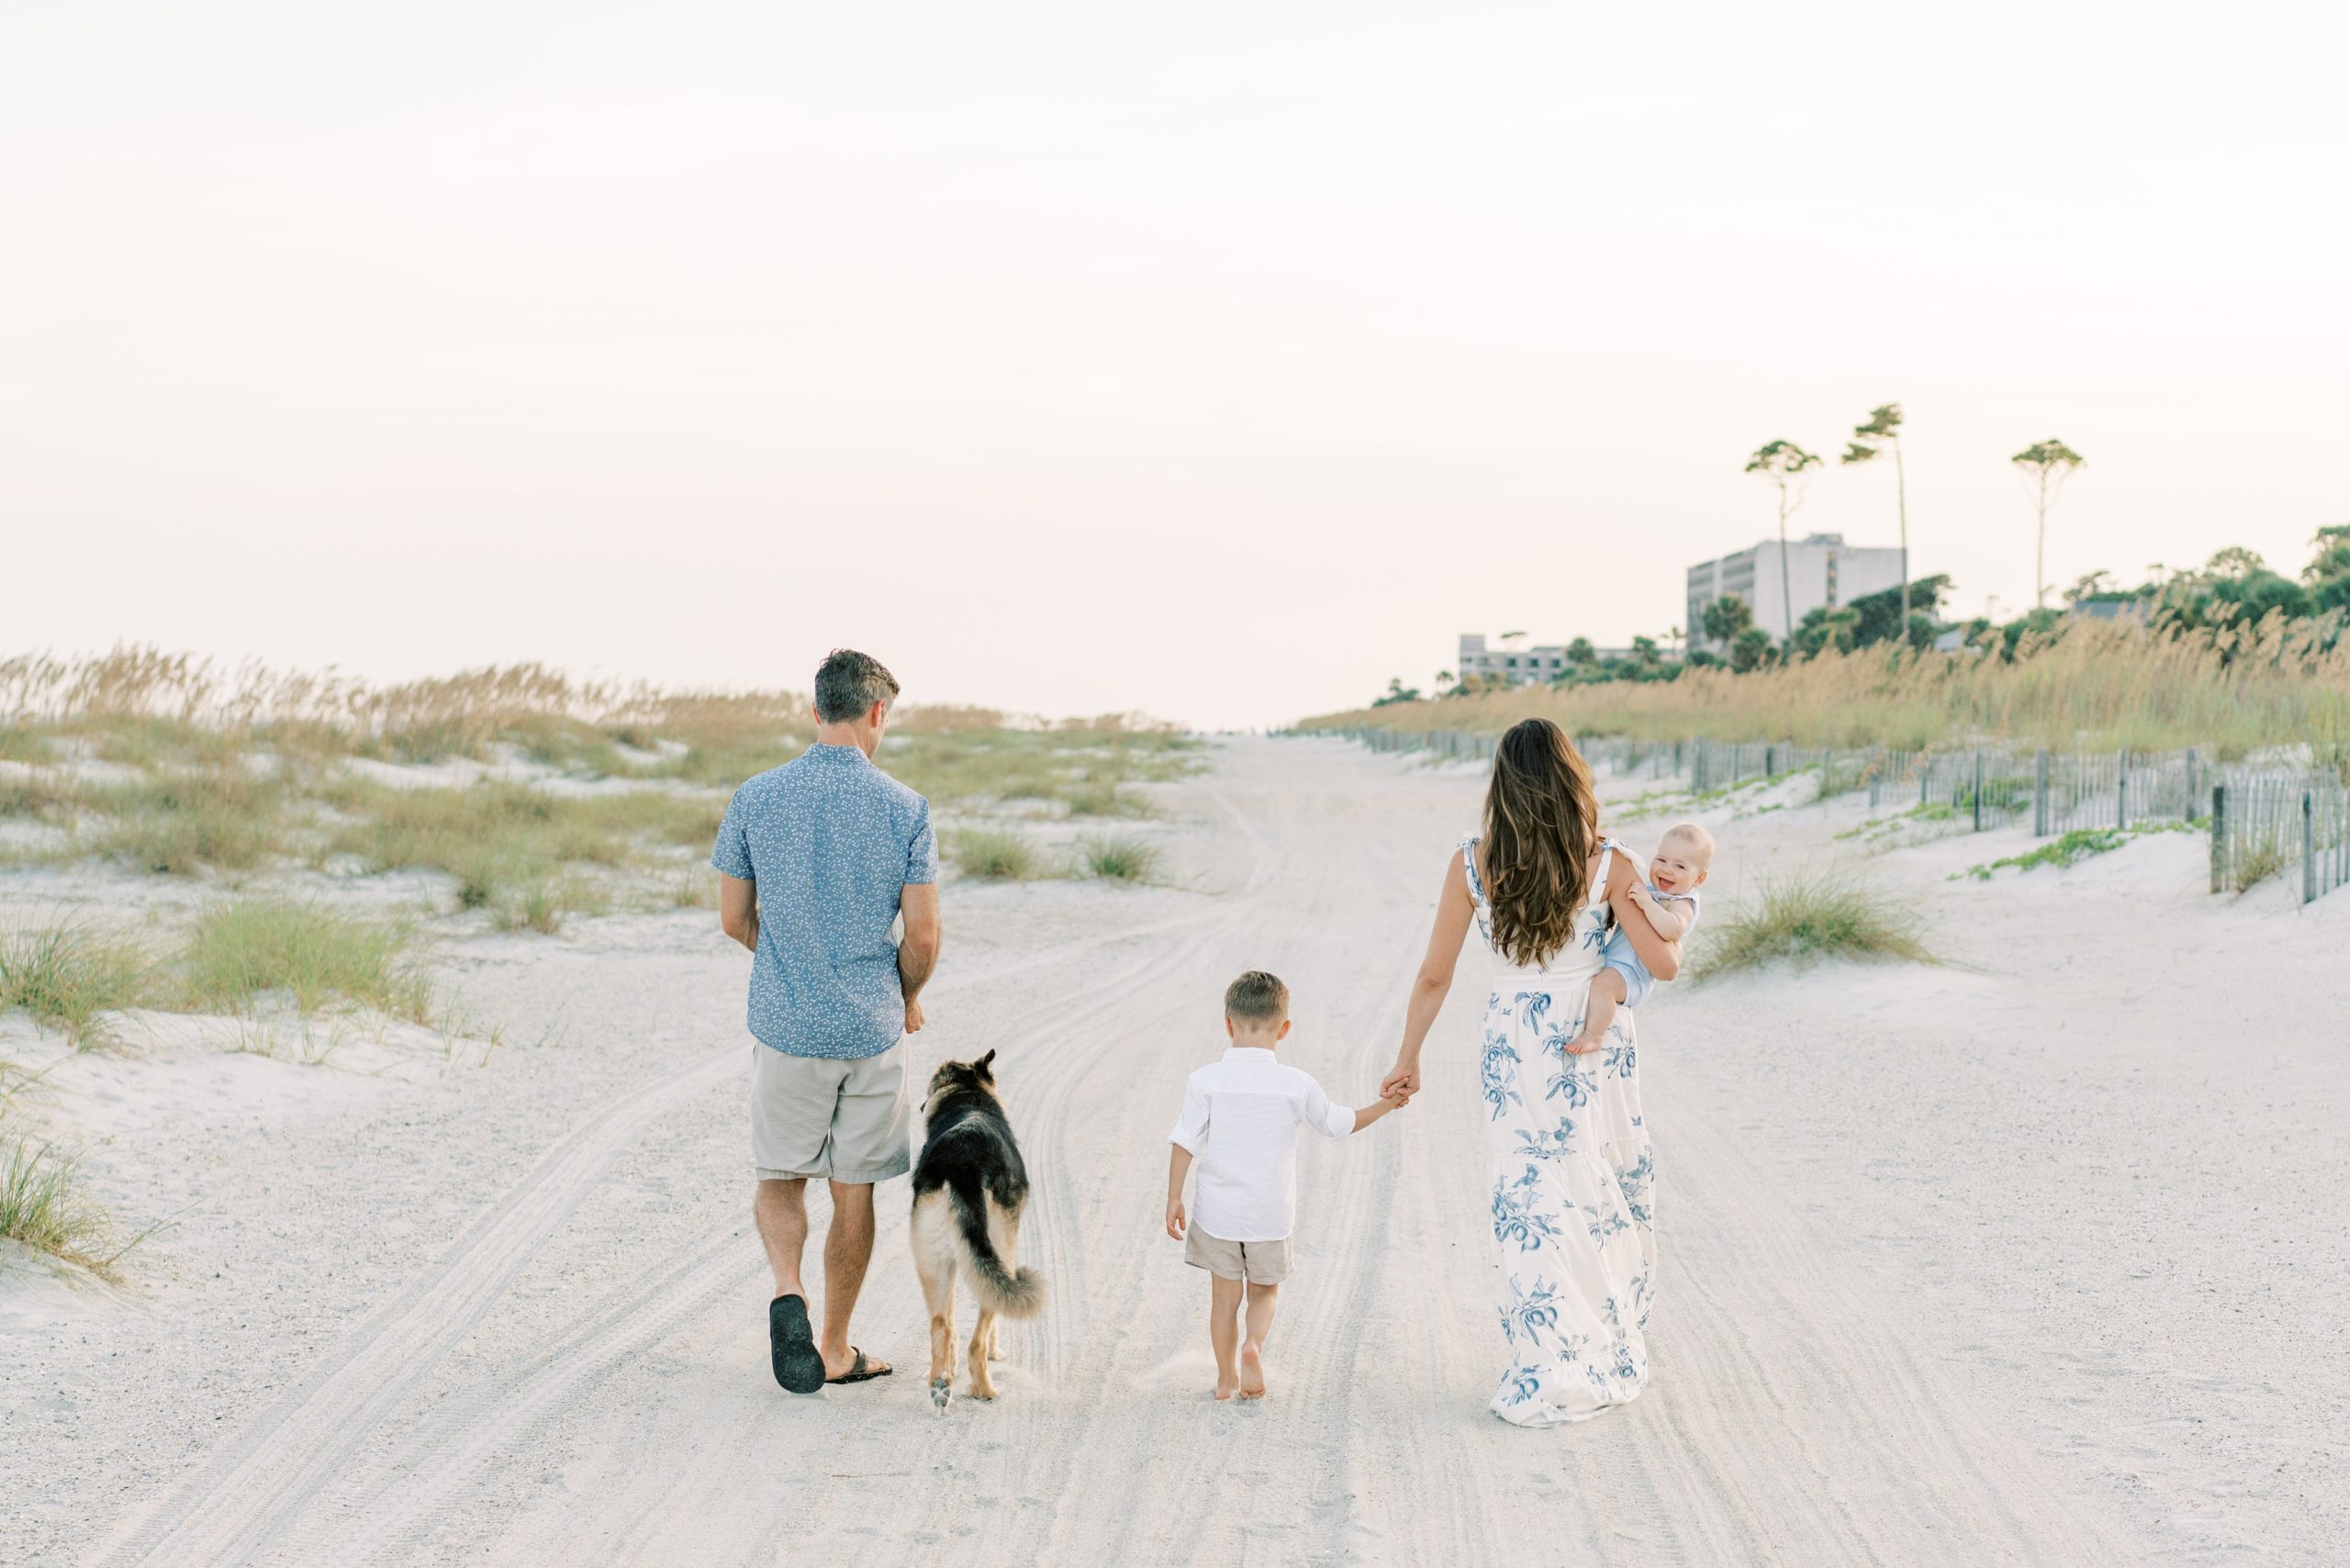 A list family vacation idea to Hilton Head Island in South Carolina.